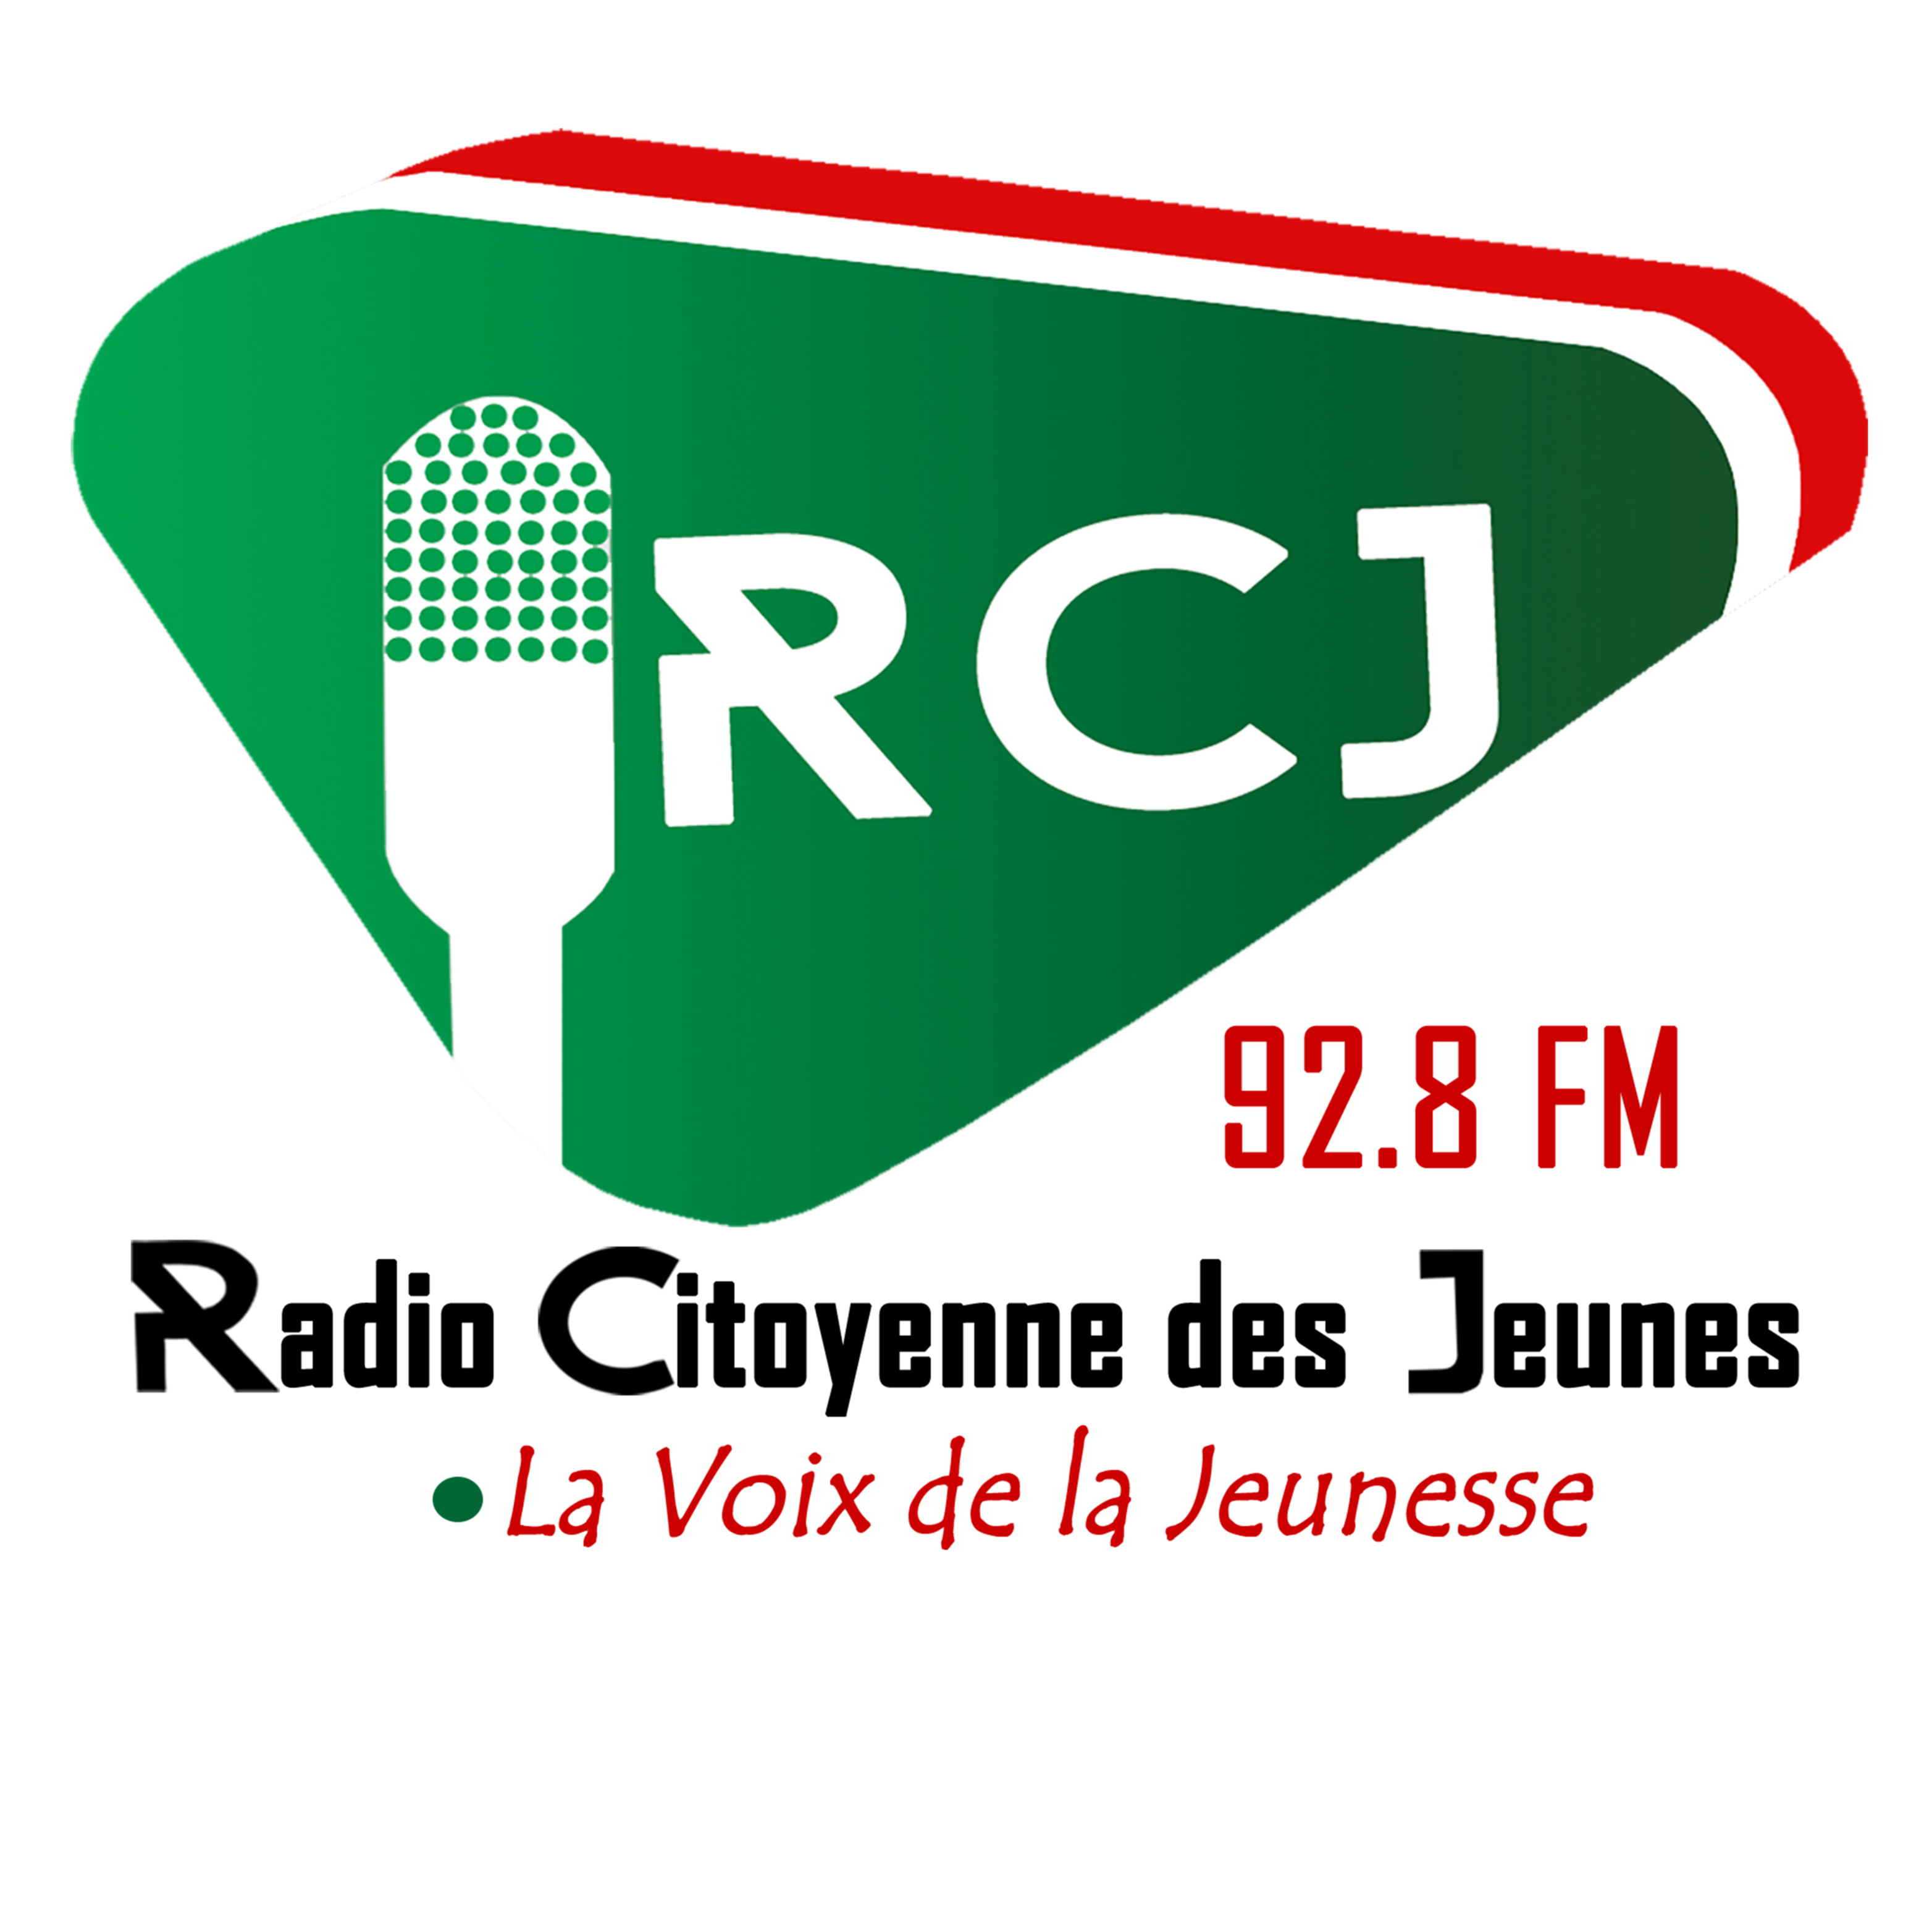 Radio Citoyenne des Jeunes